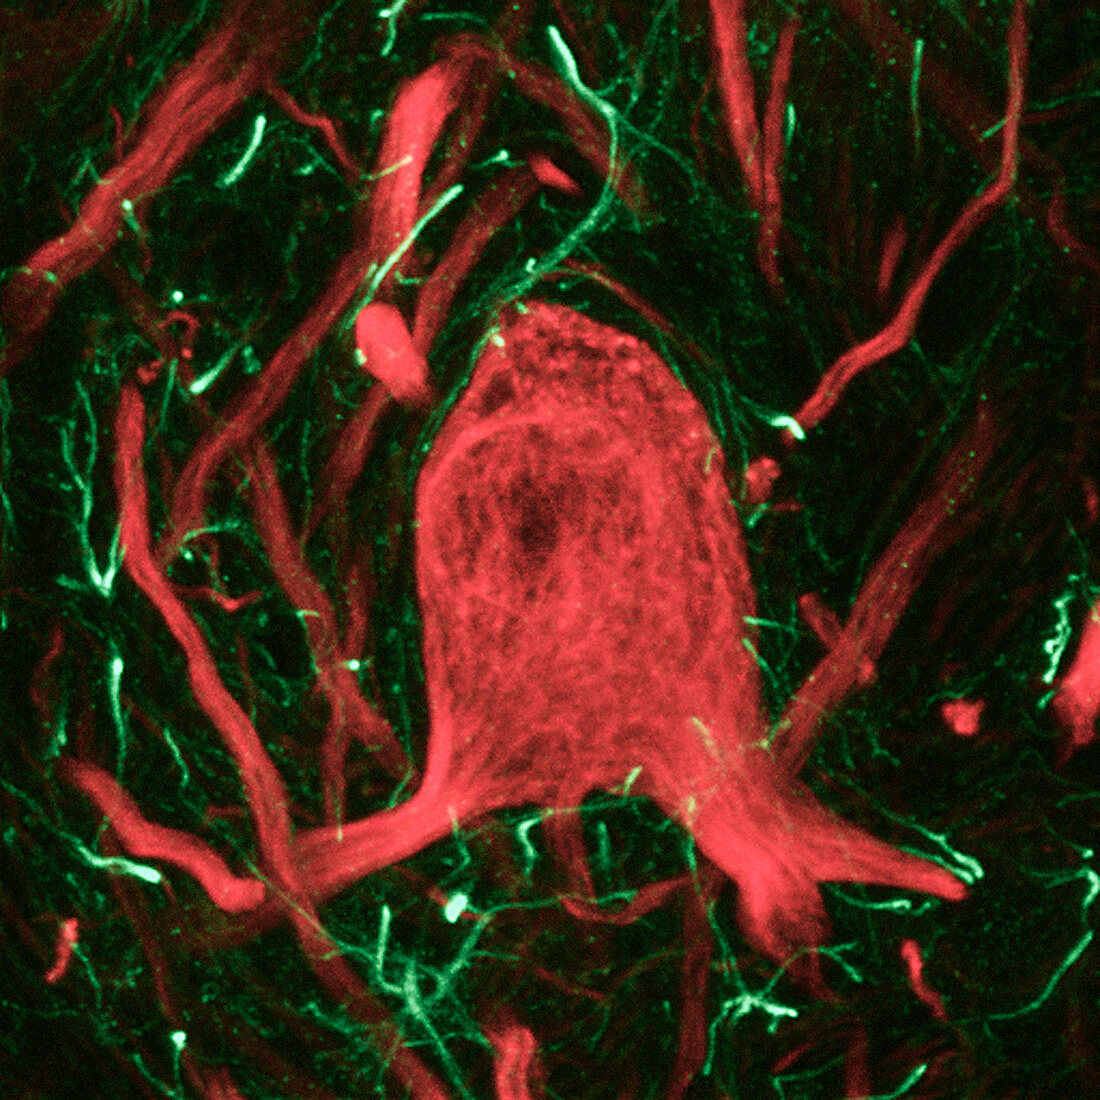 Neuron,confocal light micrograph